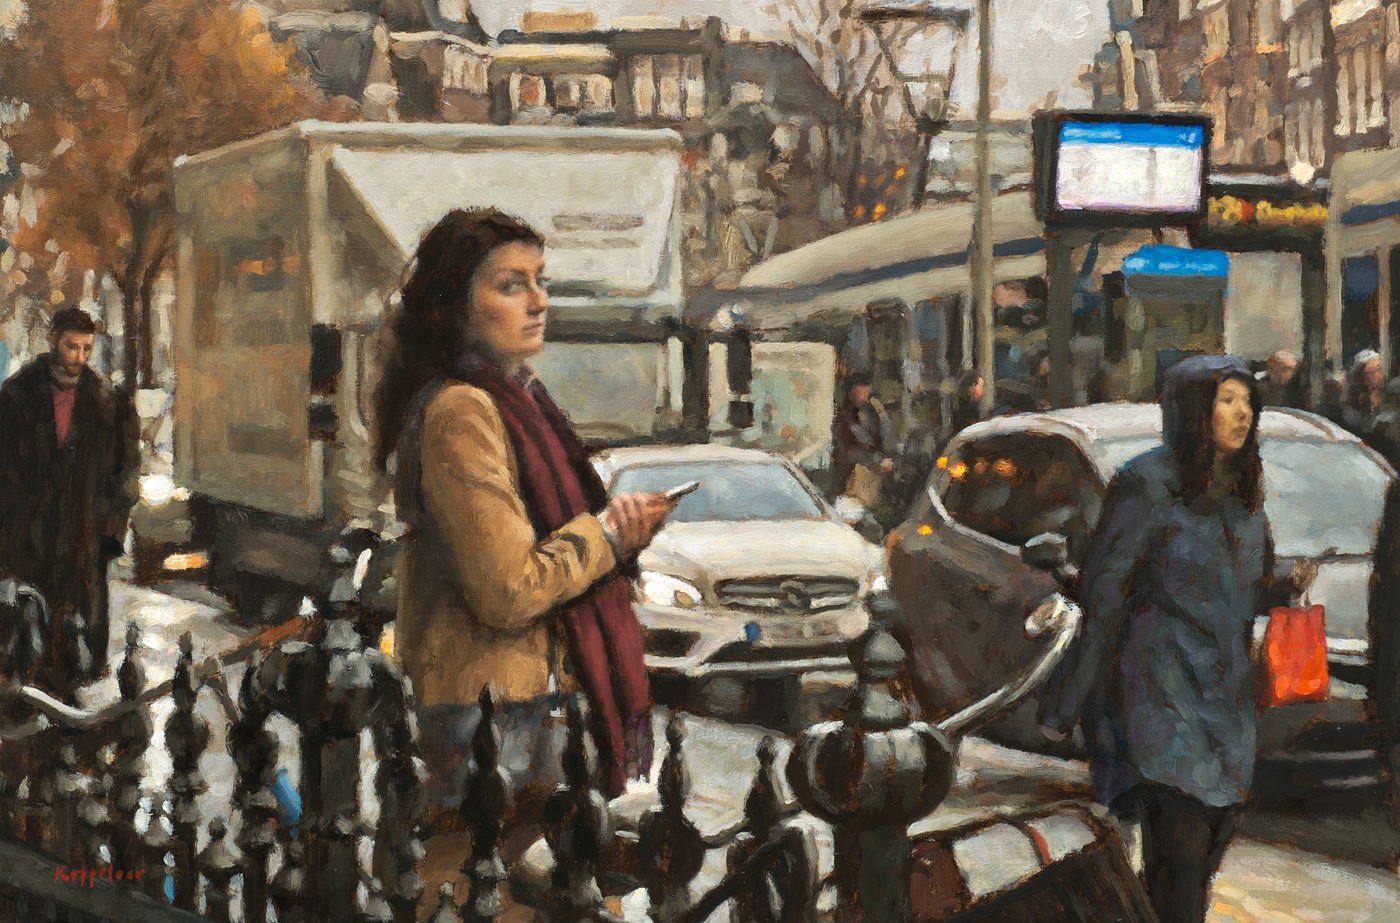 cityscape: 'Waiting' oil on linnen by Dutch painter Frans Koppelaar.